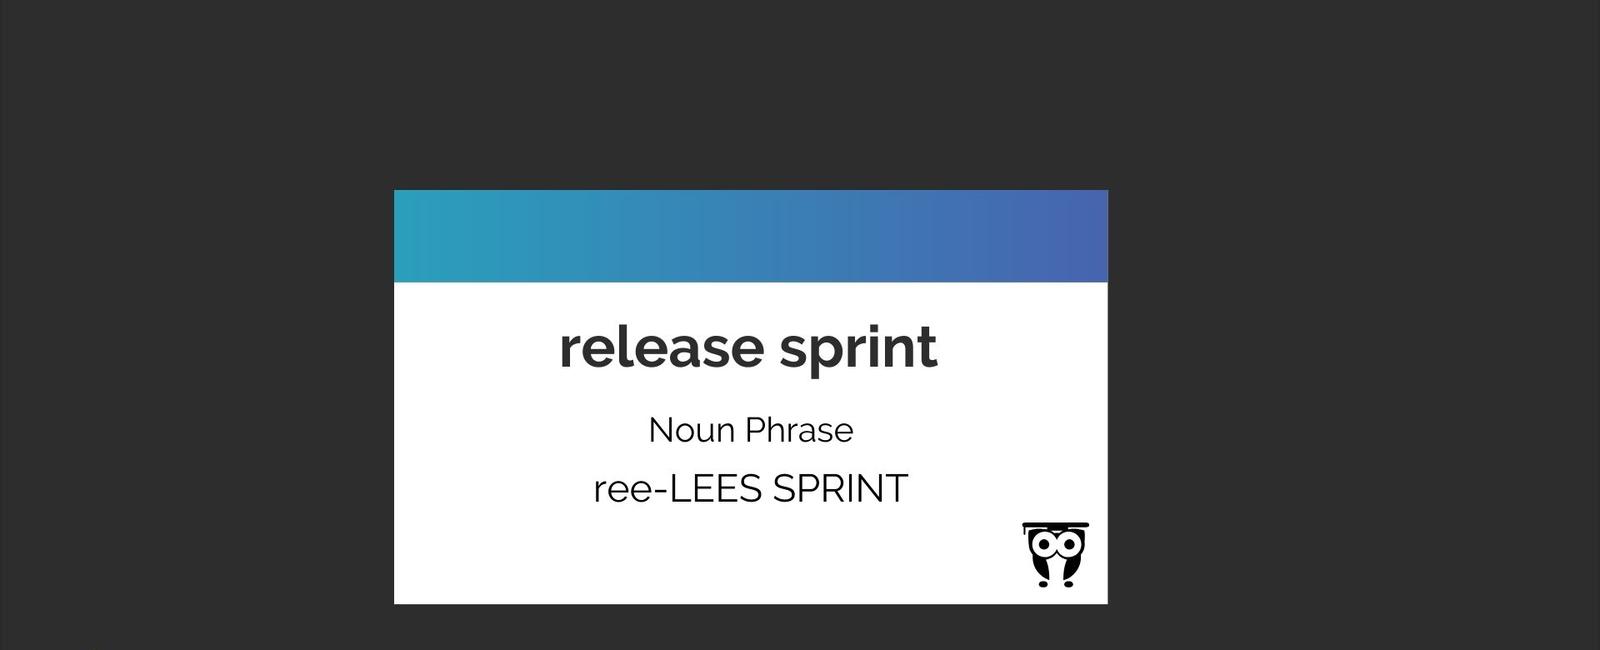 Release Sprint